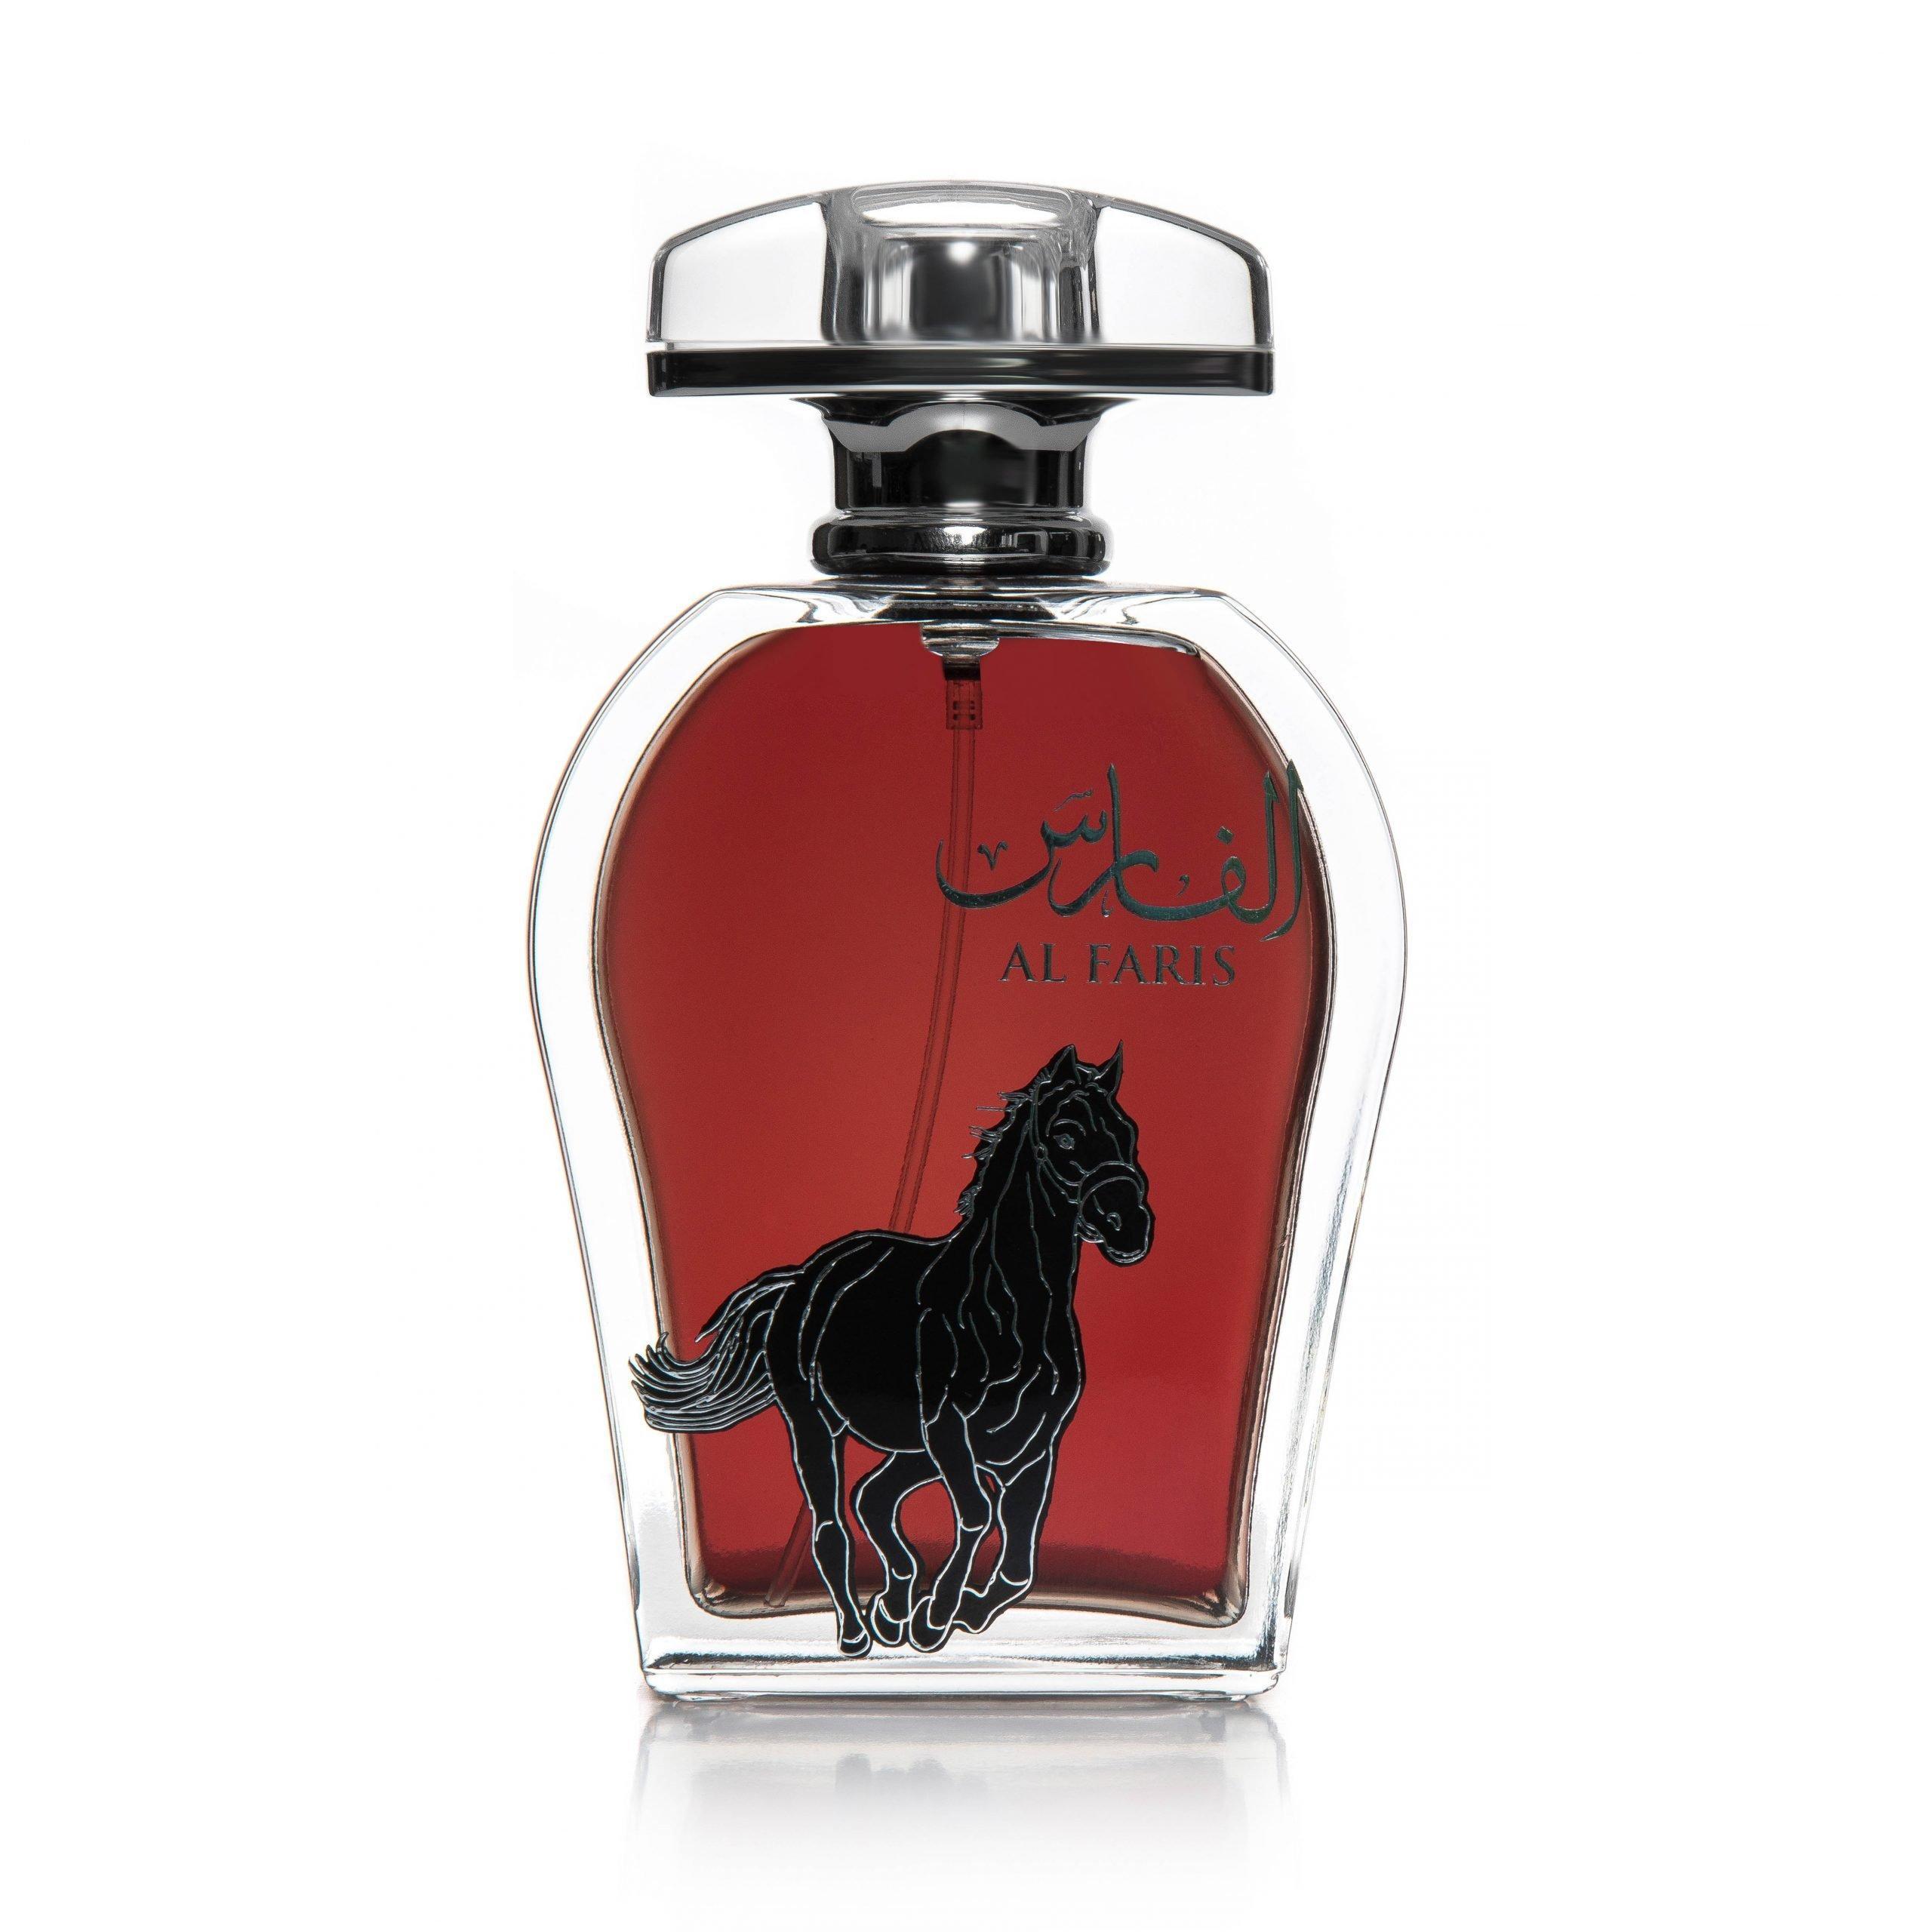 Al Faris Perfume / Eau De Parfum 100Ml By My Perfumes